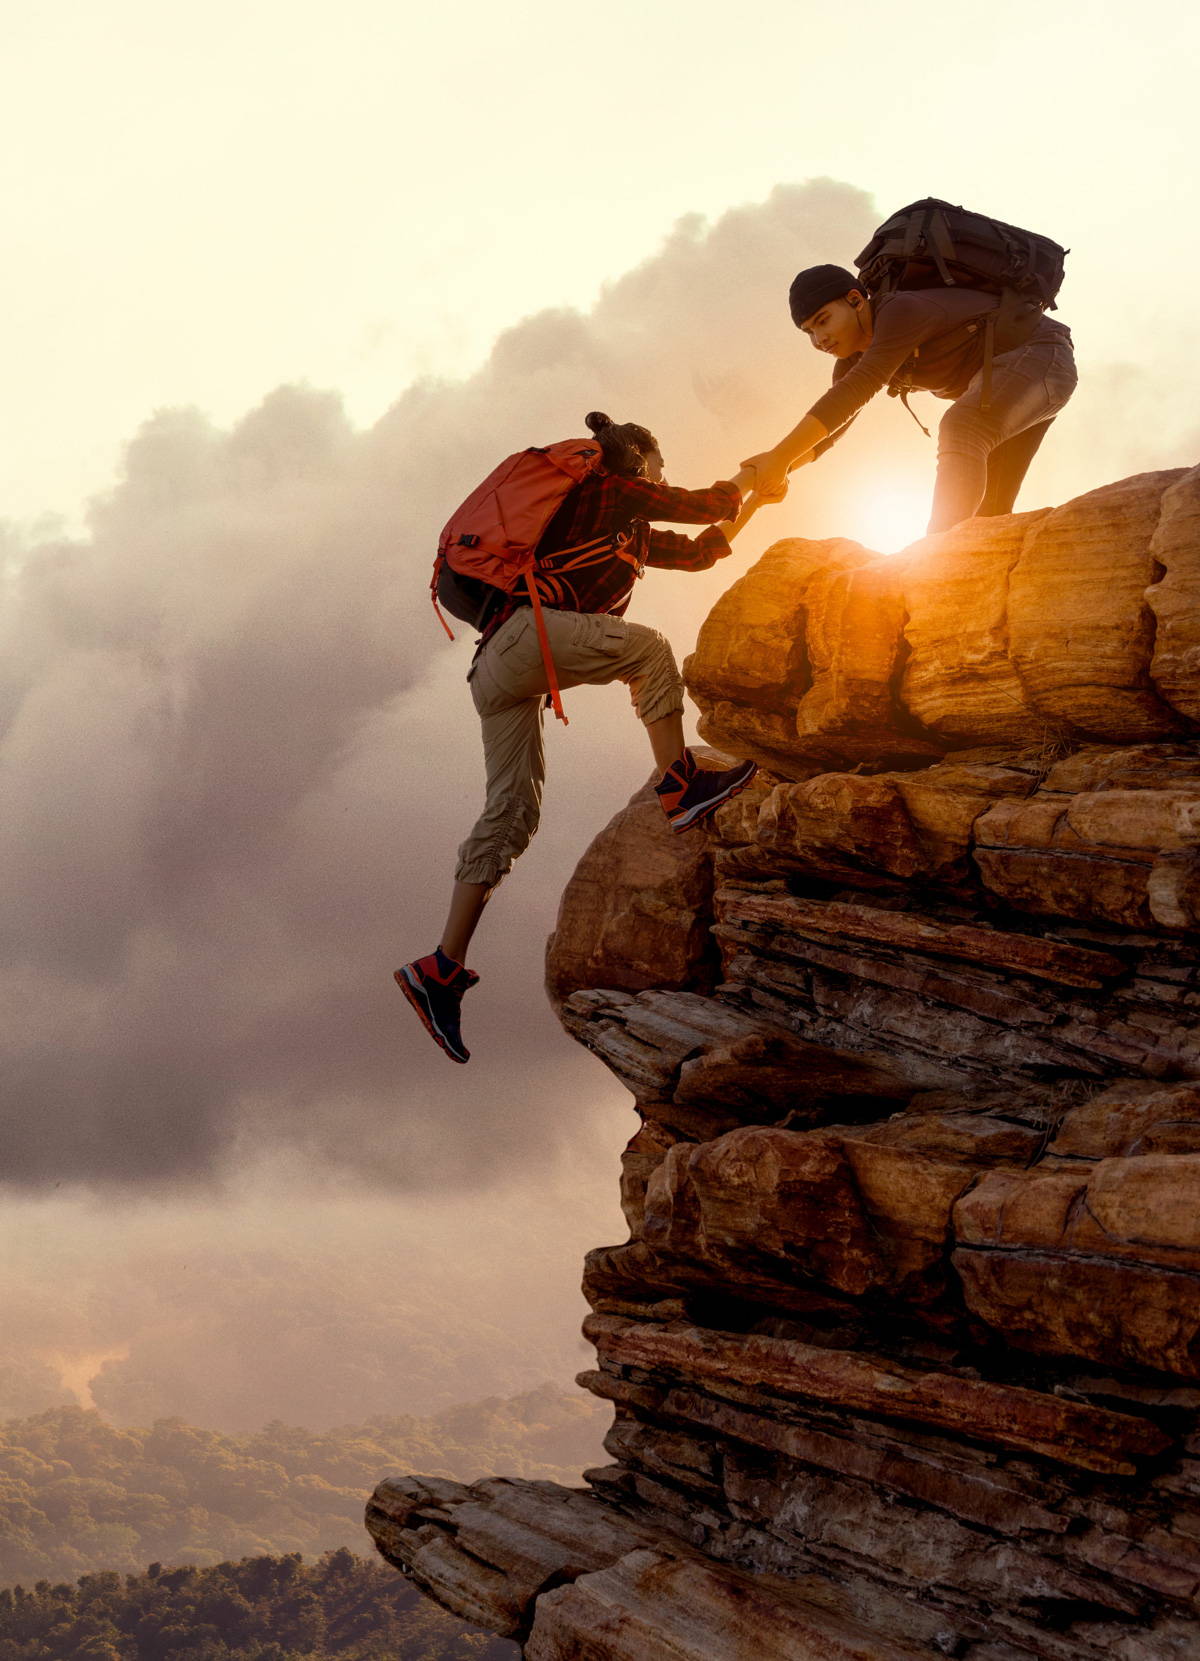 A mountain climber helping their partner up a ledge